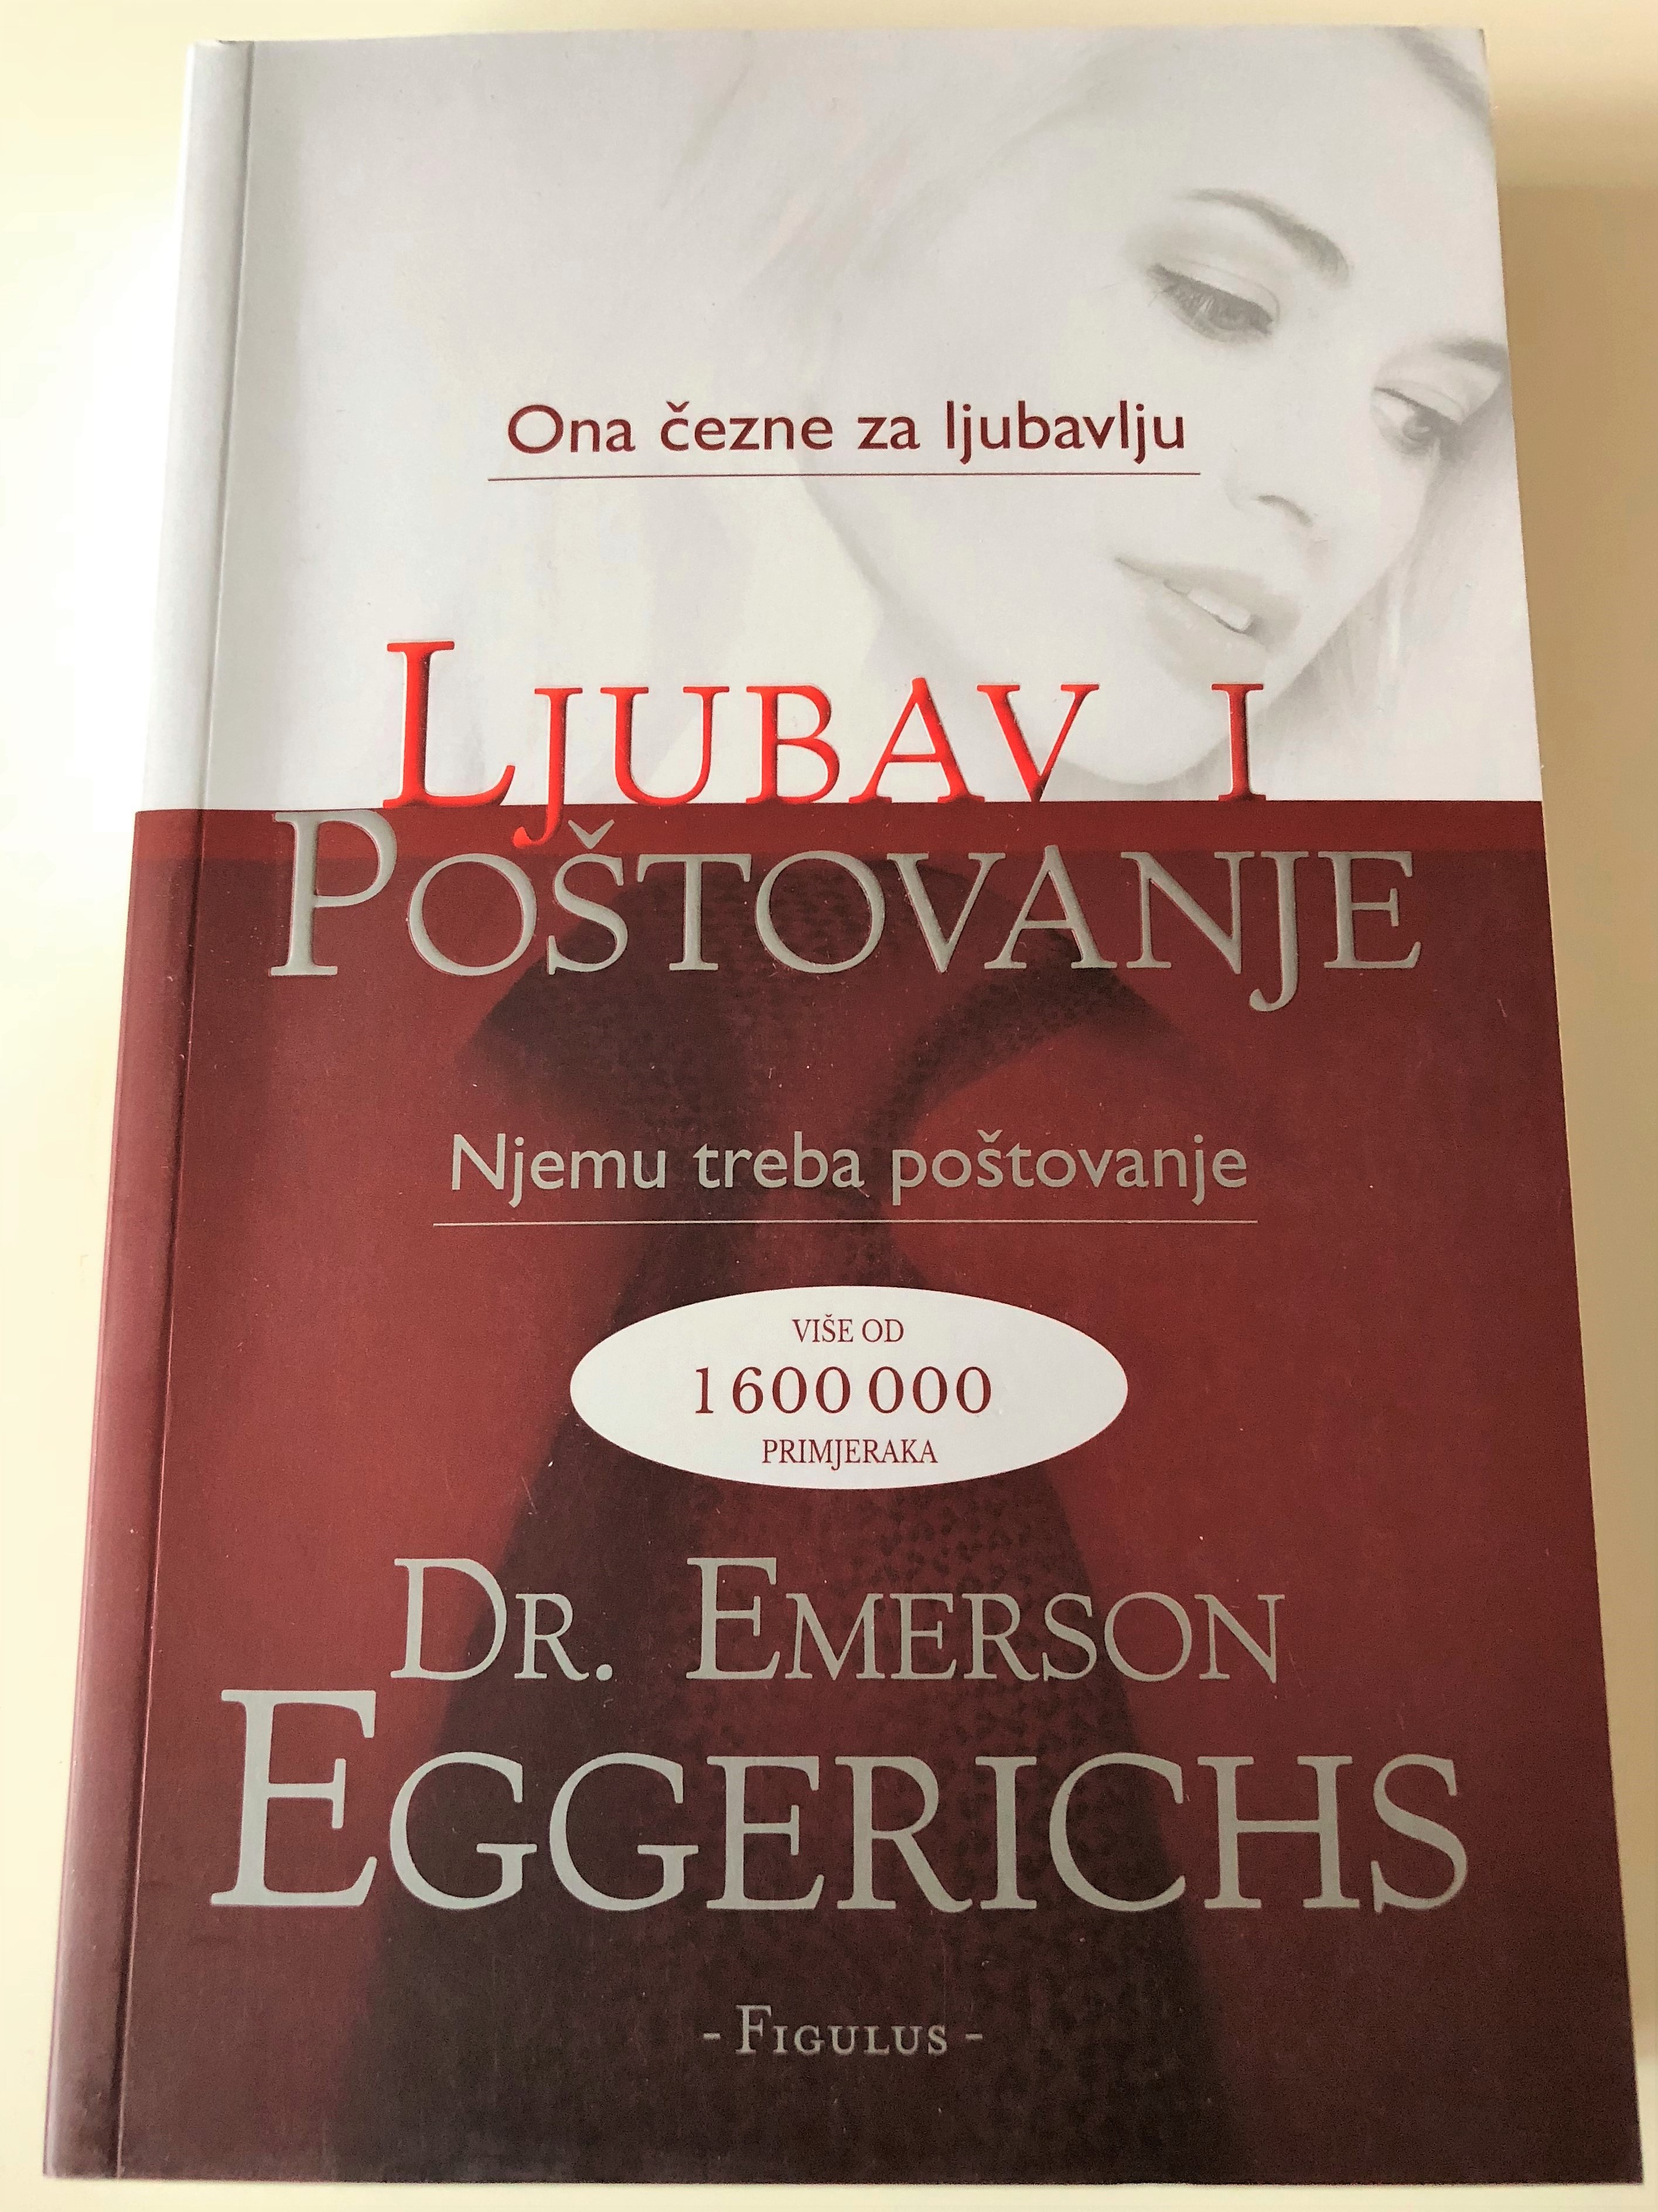 croatian-love-and-respect-e.eggerichs-paperback-1-.jpg